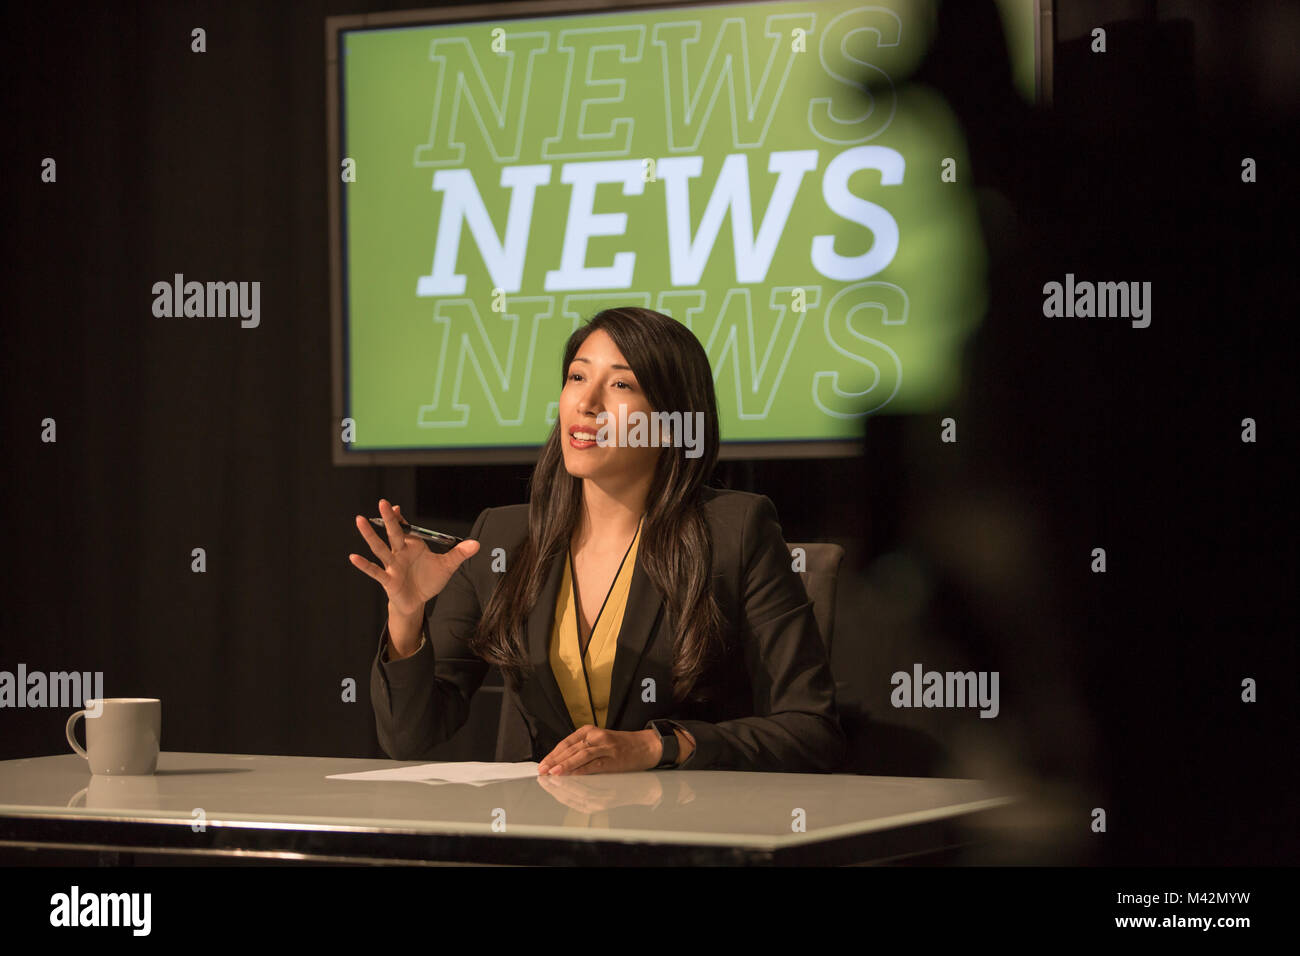 News Presenter in einem TV-Studio Stockfoto